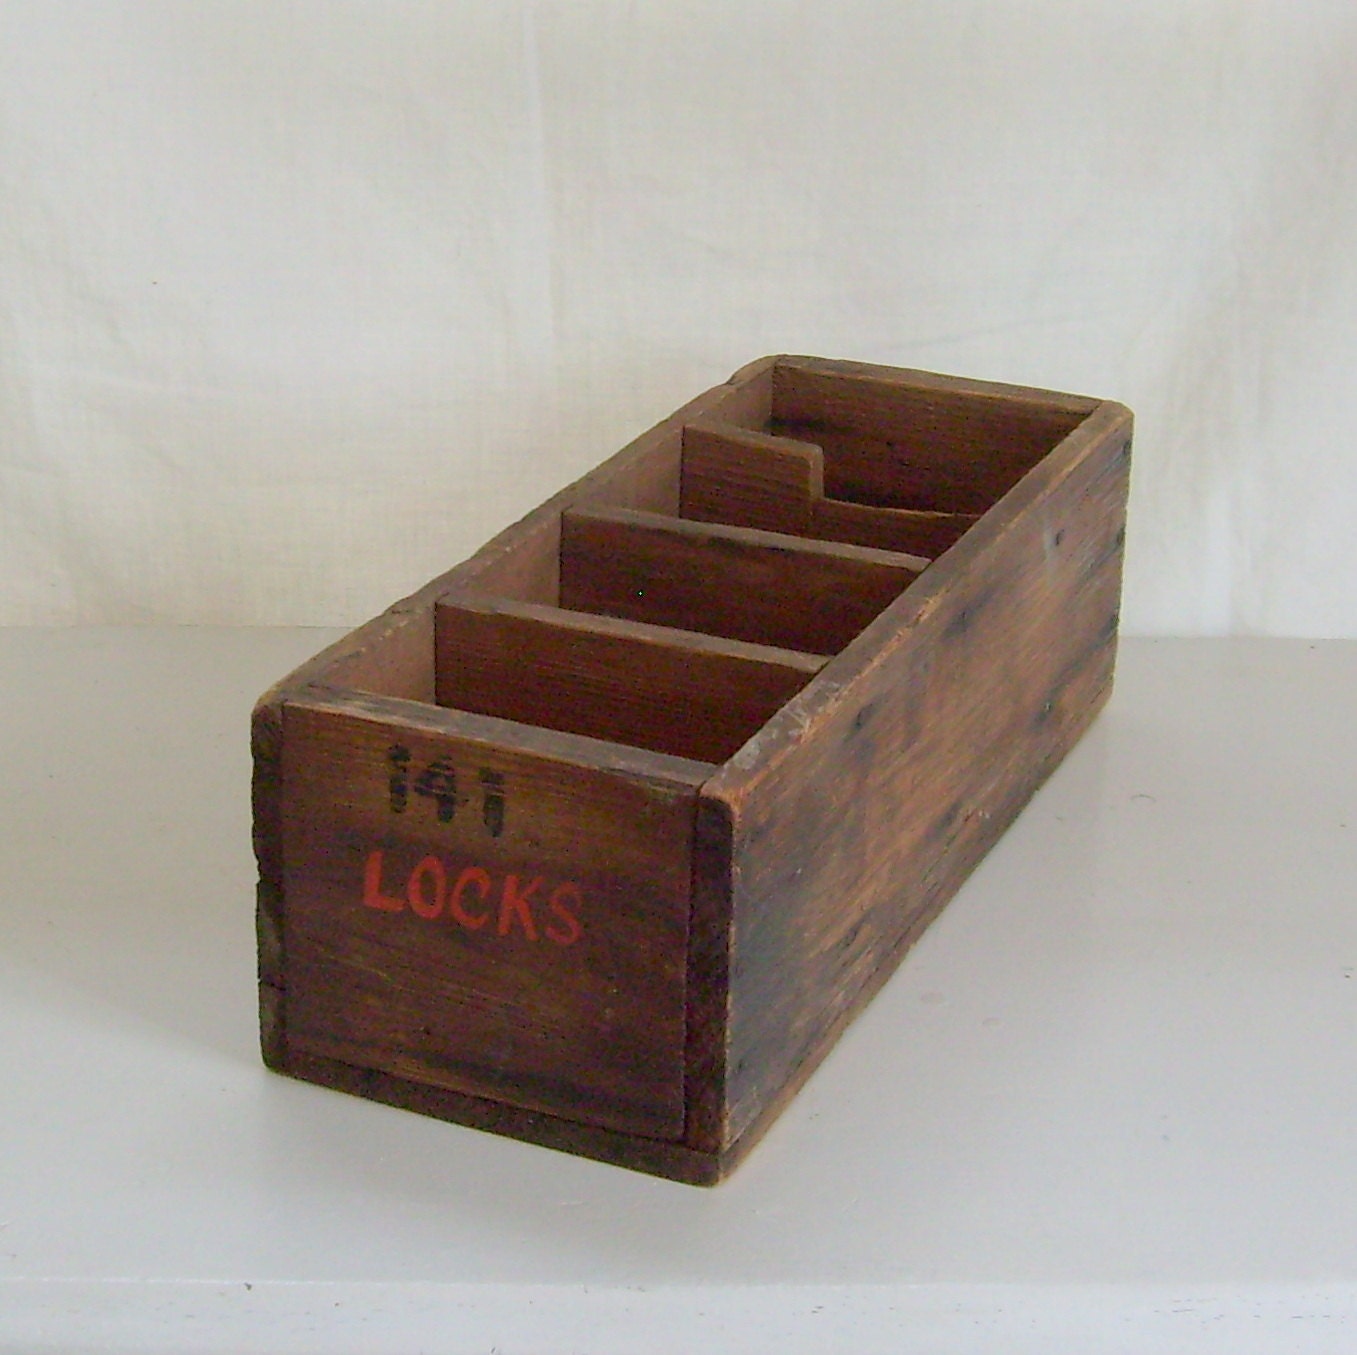 Vintage industrial divided wood box storage caddy marked 141 locks - trendybindi